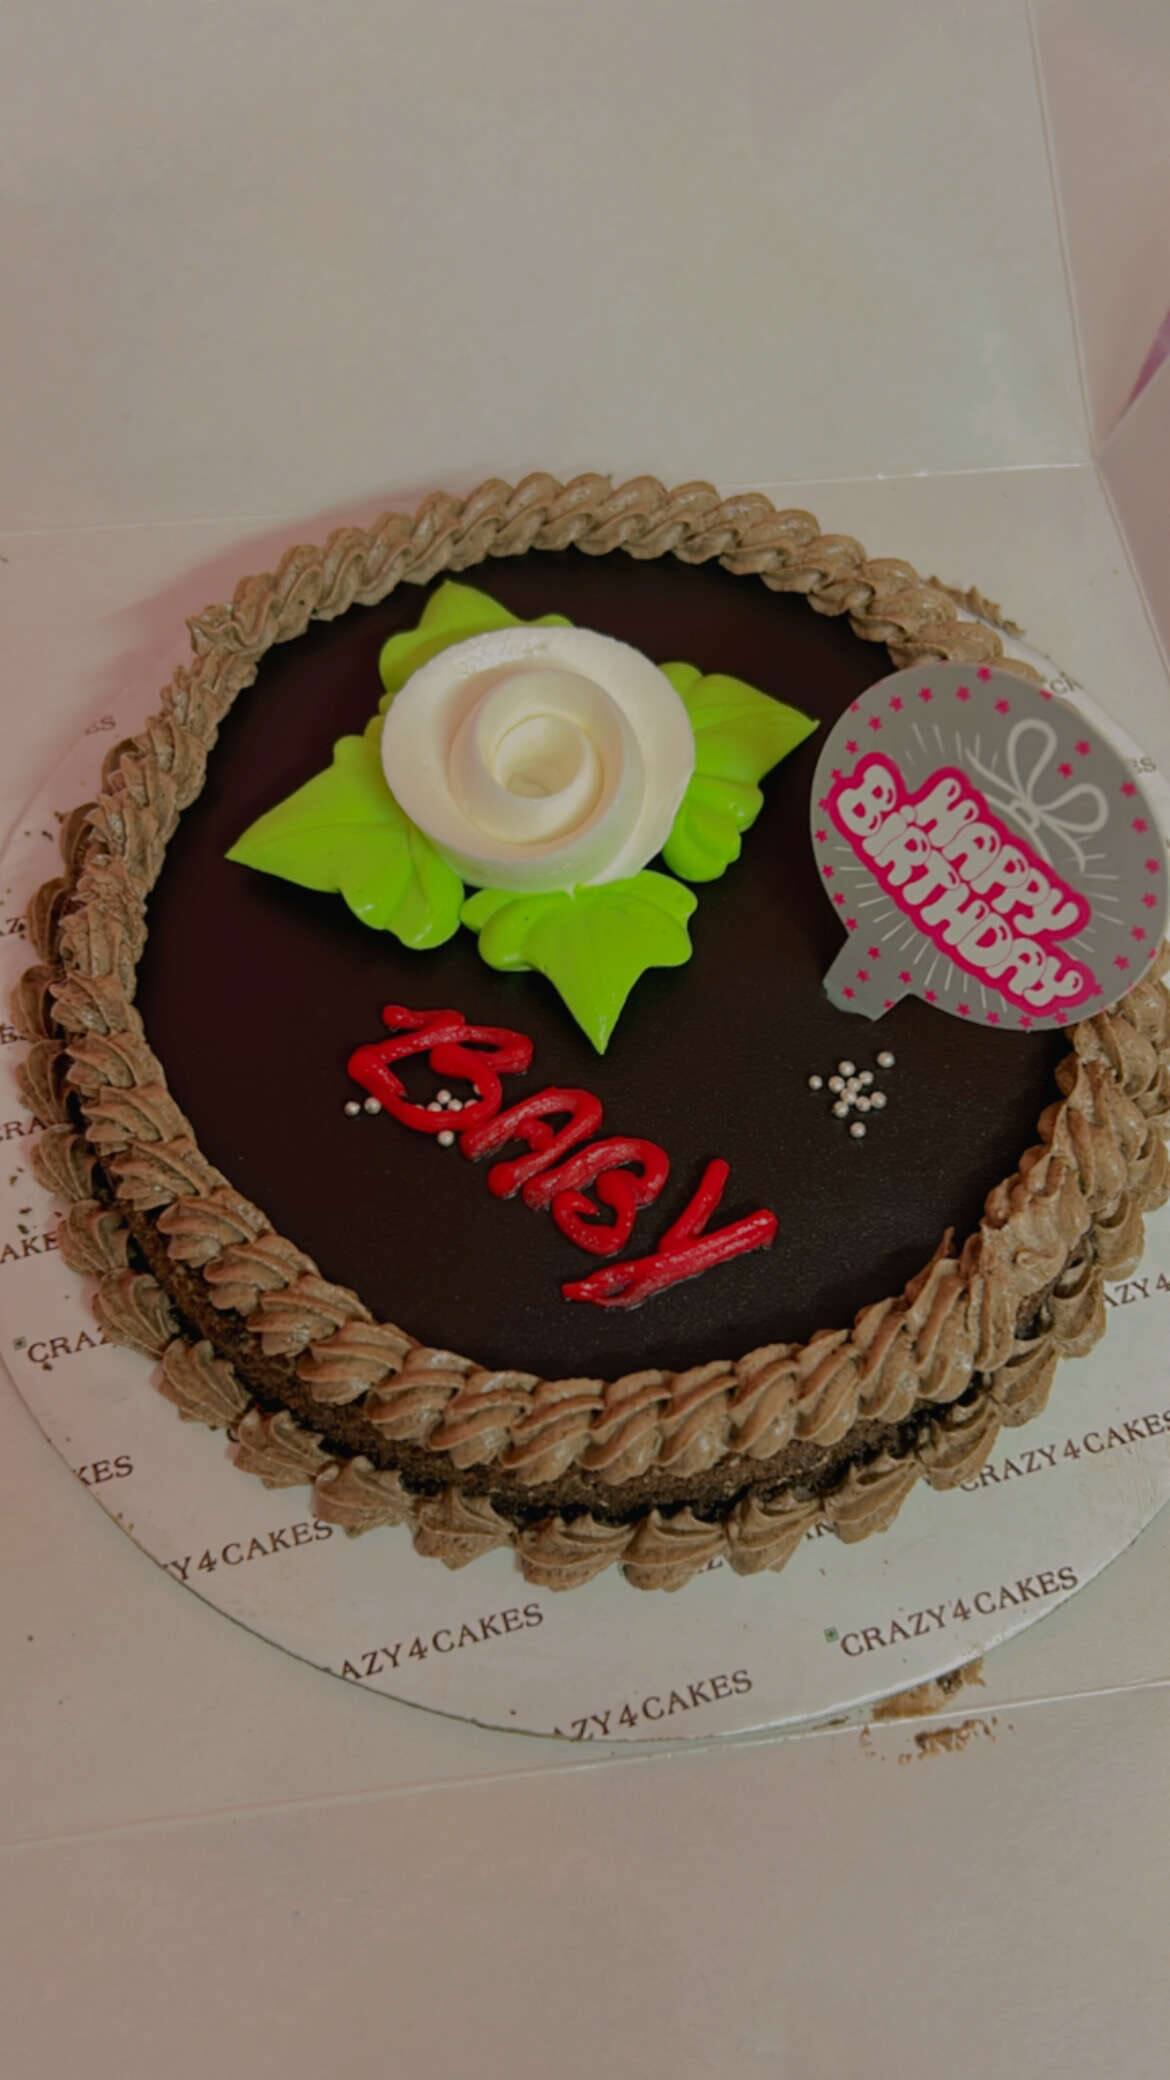 Crazy 4 Cakes - Birthday Cake, Wedding Cakes, Custom Cakes, & Gluten Free  Options. Order Online & Save!! Cake Shop in Kolkata